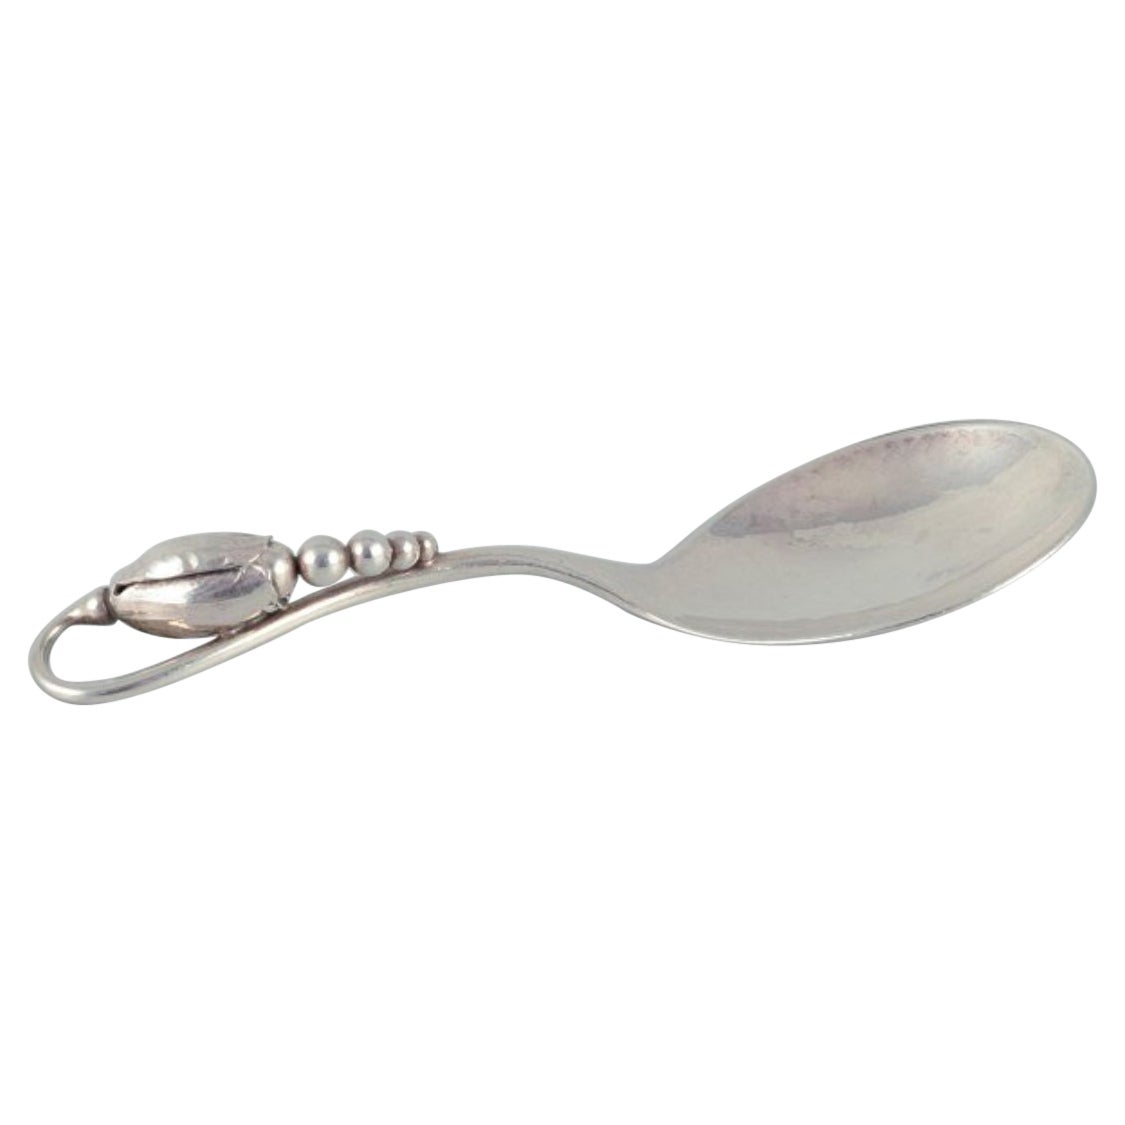 Georg Jensen, Denmark. "Blossom" sugar spoon in sterling silver.